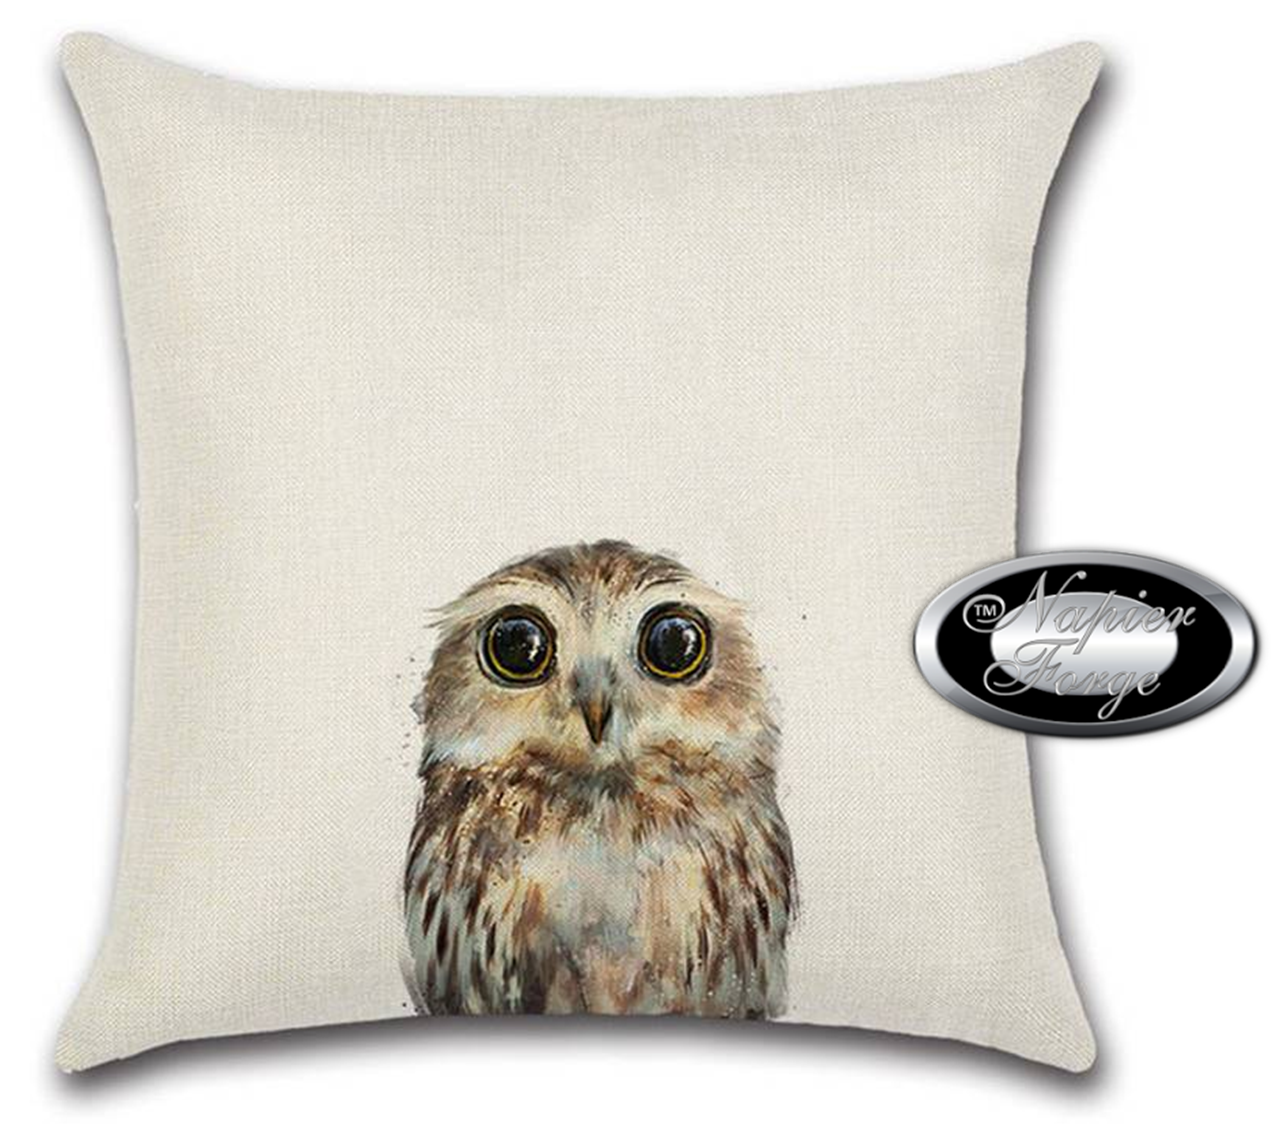 Farmhouse Cotton Linen Blend Cushion Cover 45cm x 45cm - Design Owl Glance *Free Shipping